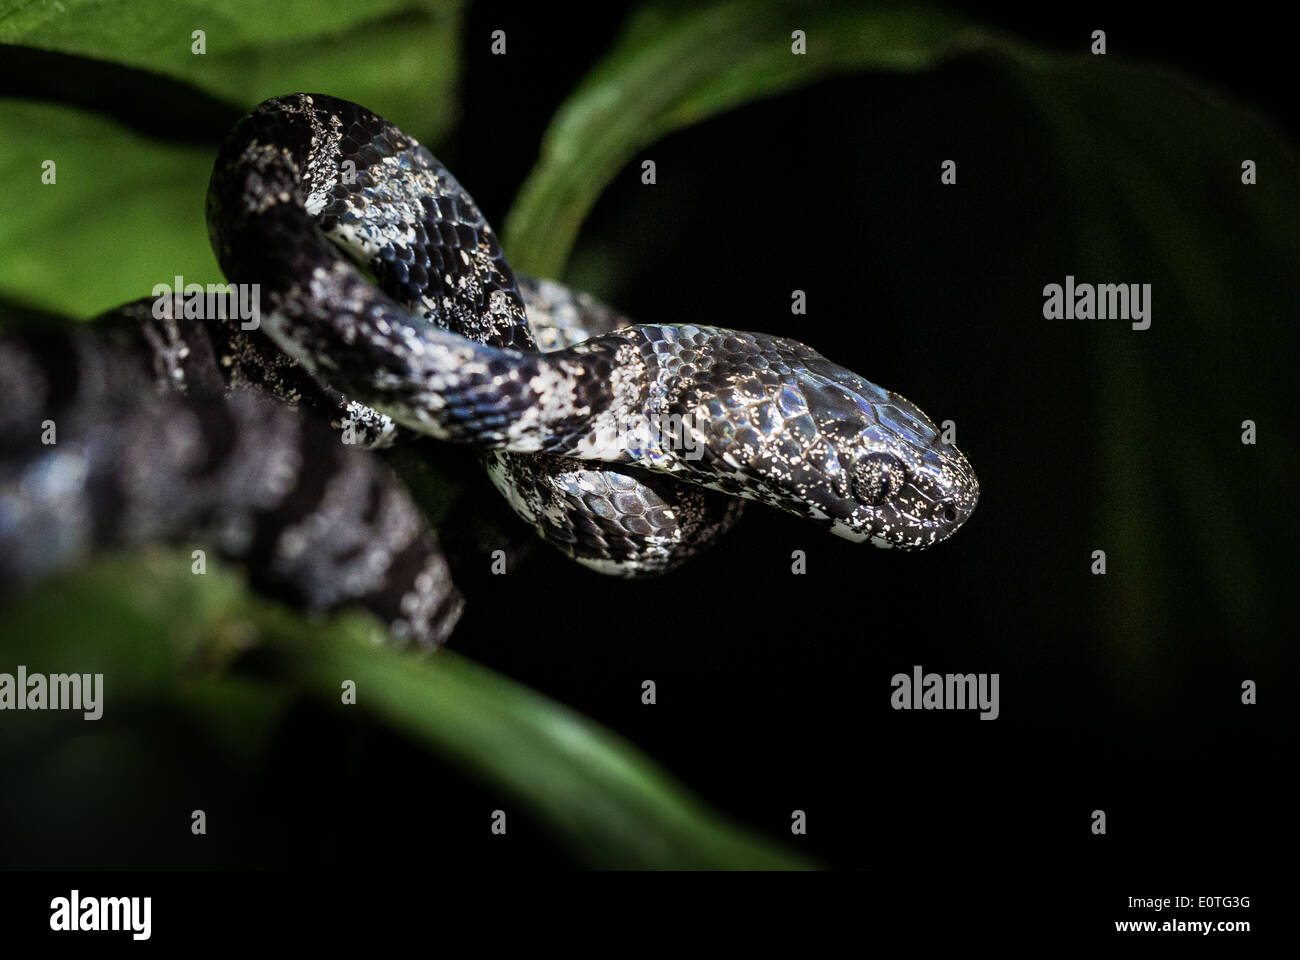 Snail eating snake hunting at night Costa Rica Sarapiqui Stock Photo